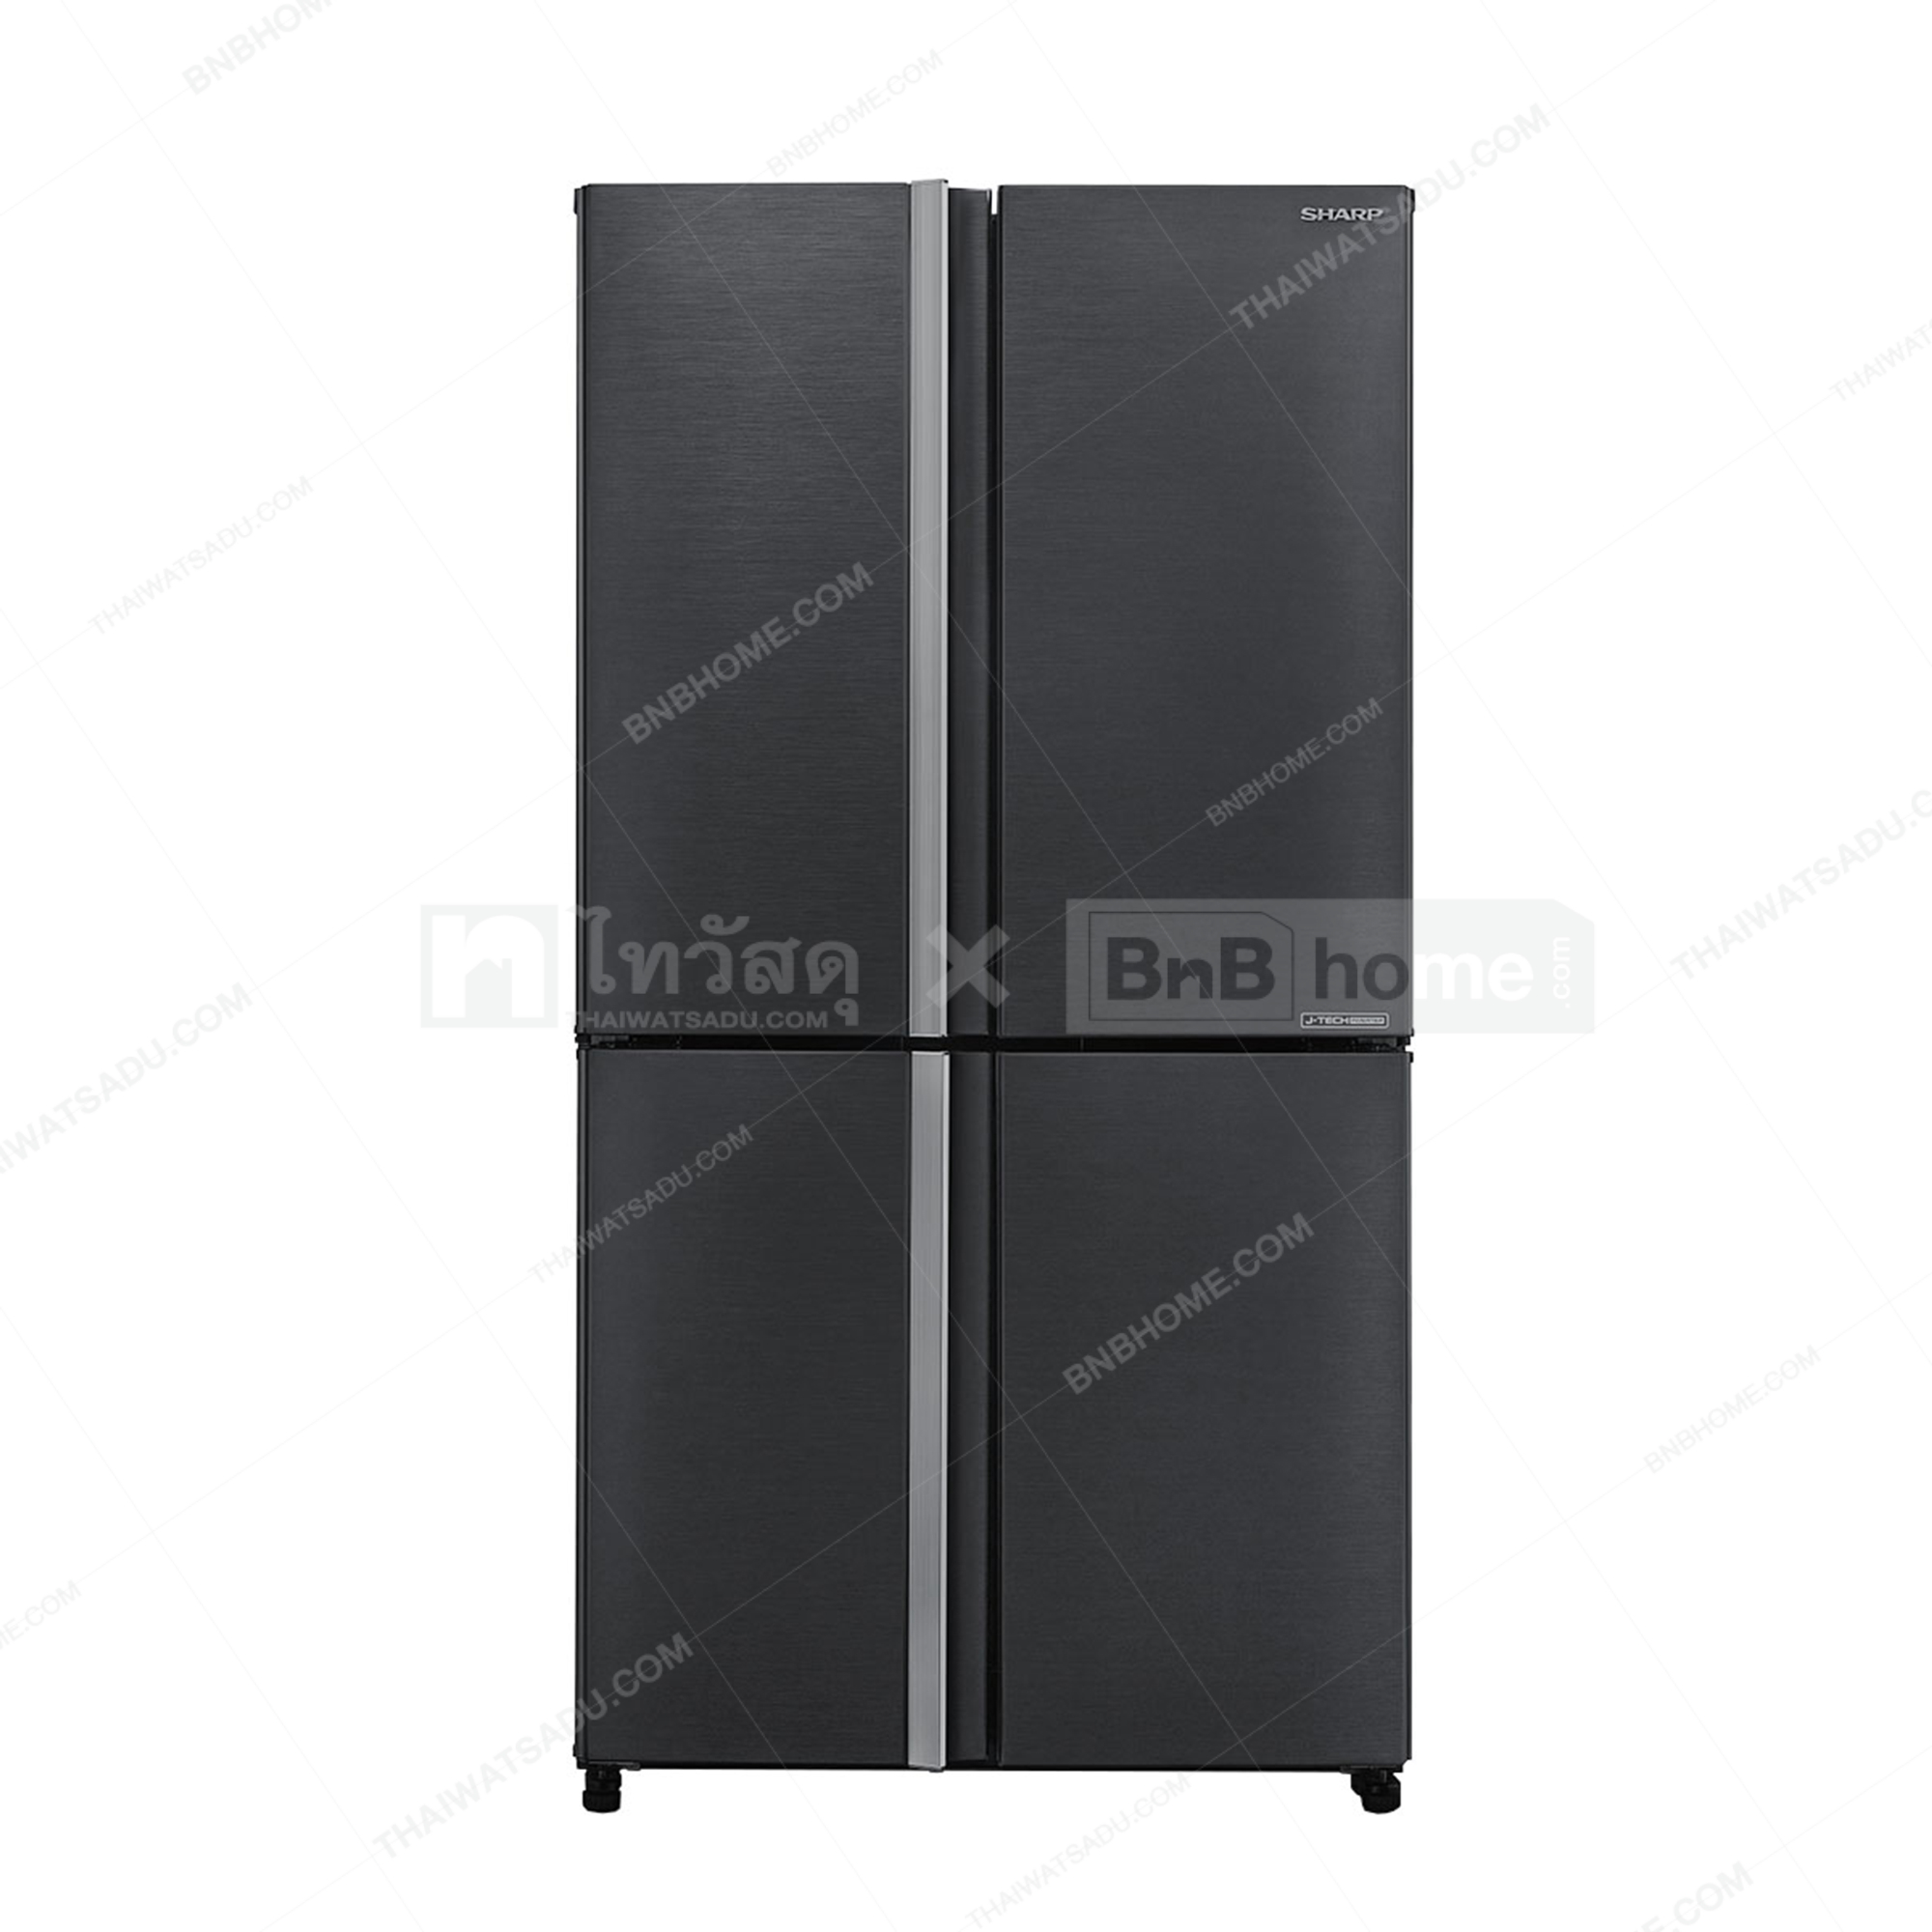 SHARP Refrigerator 4 Door SJ-FX52TP-SL Silver 18.5 THAI - Q WATSADU